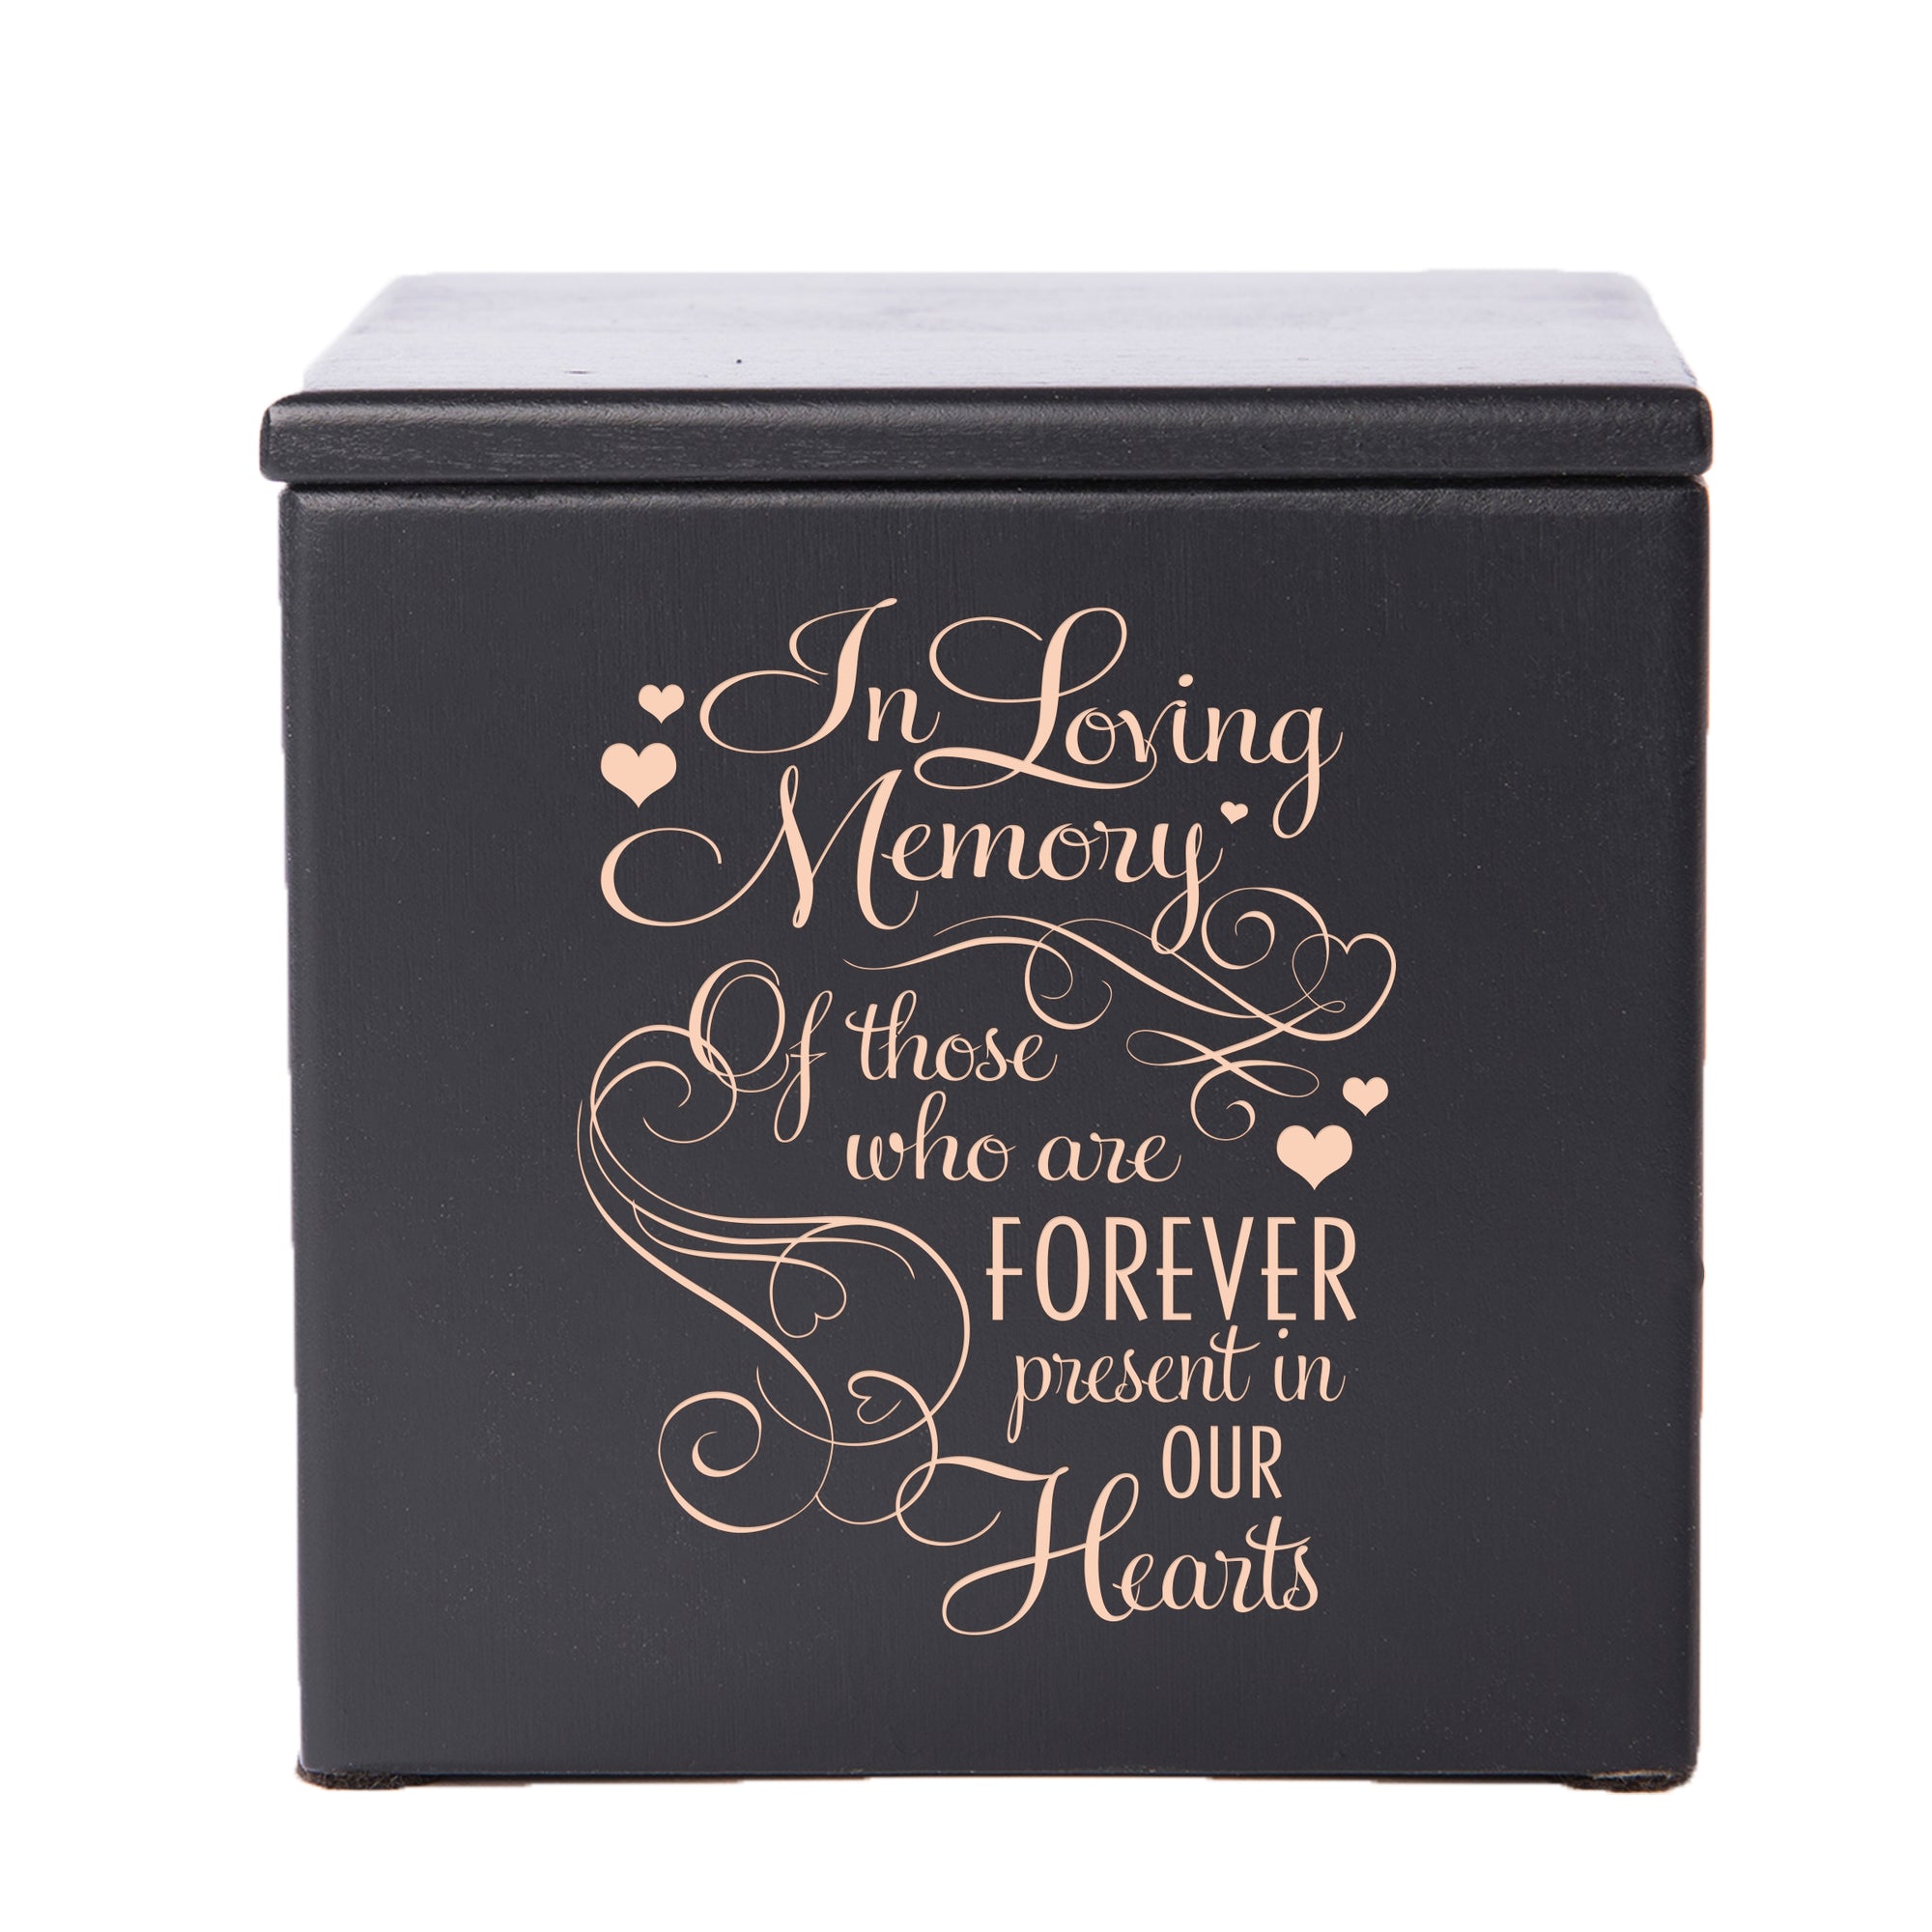 LifeSong Milestones Memorial Keepsake Box Bereavement Keepsake Box Loss of Loved One Sympathy Home Decor - 3.5” x 3.5” x 3.5”